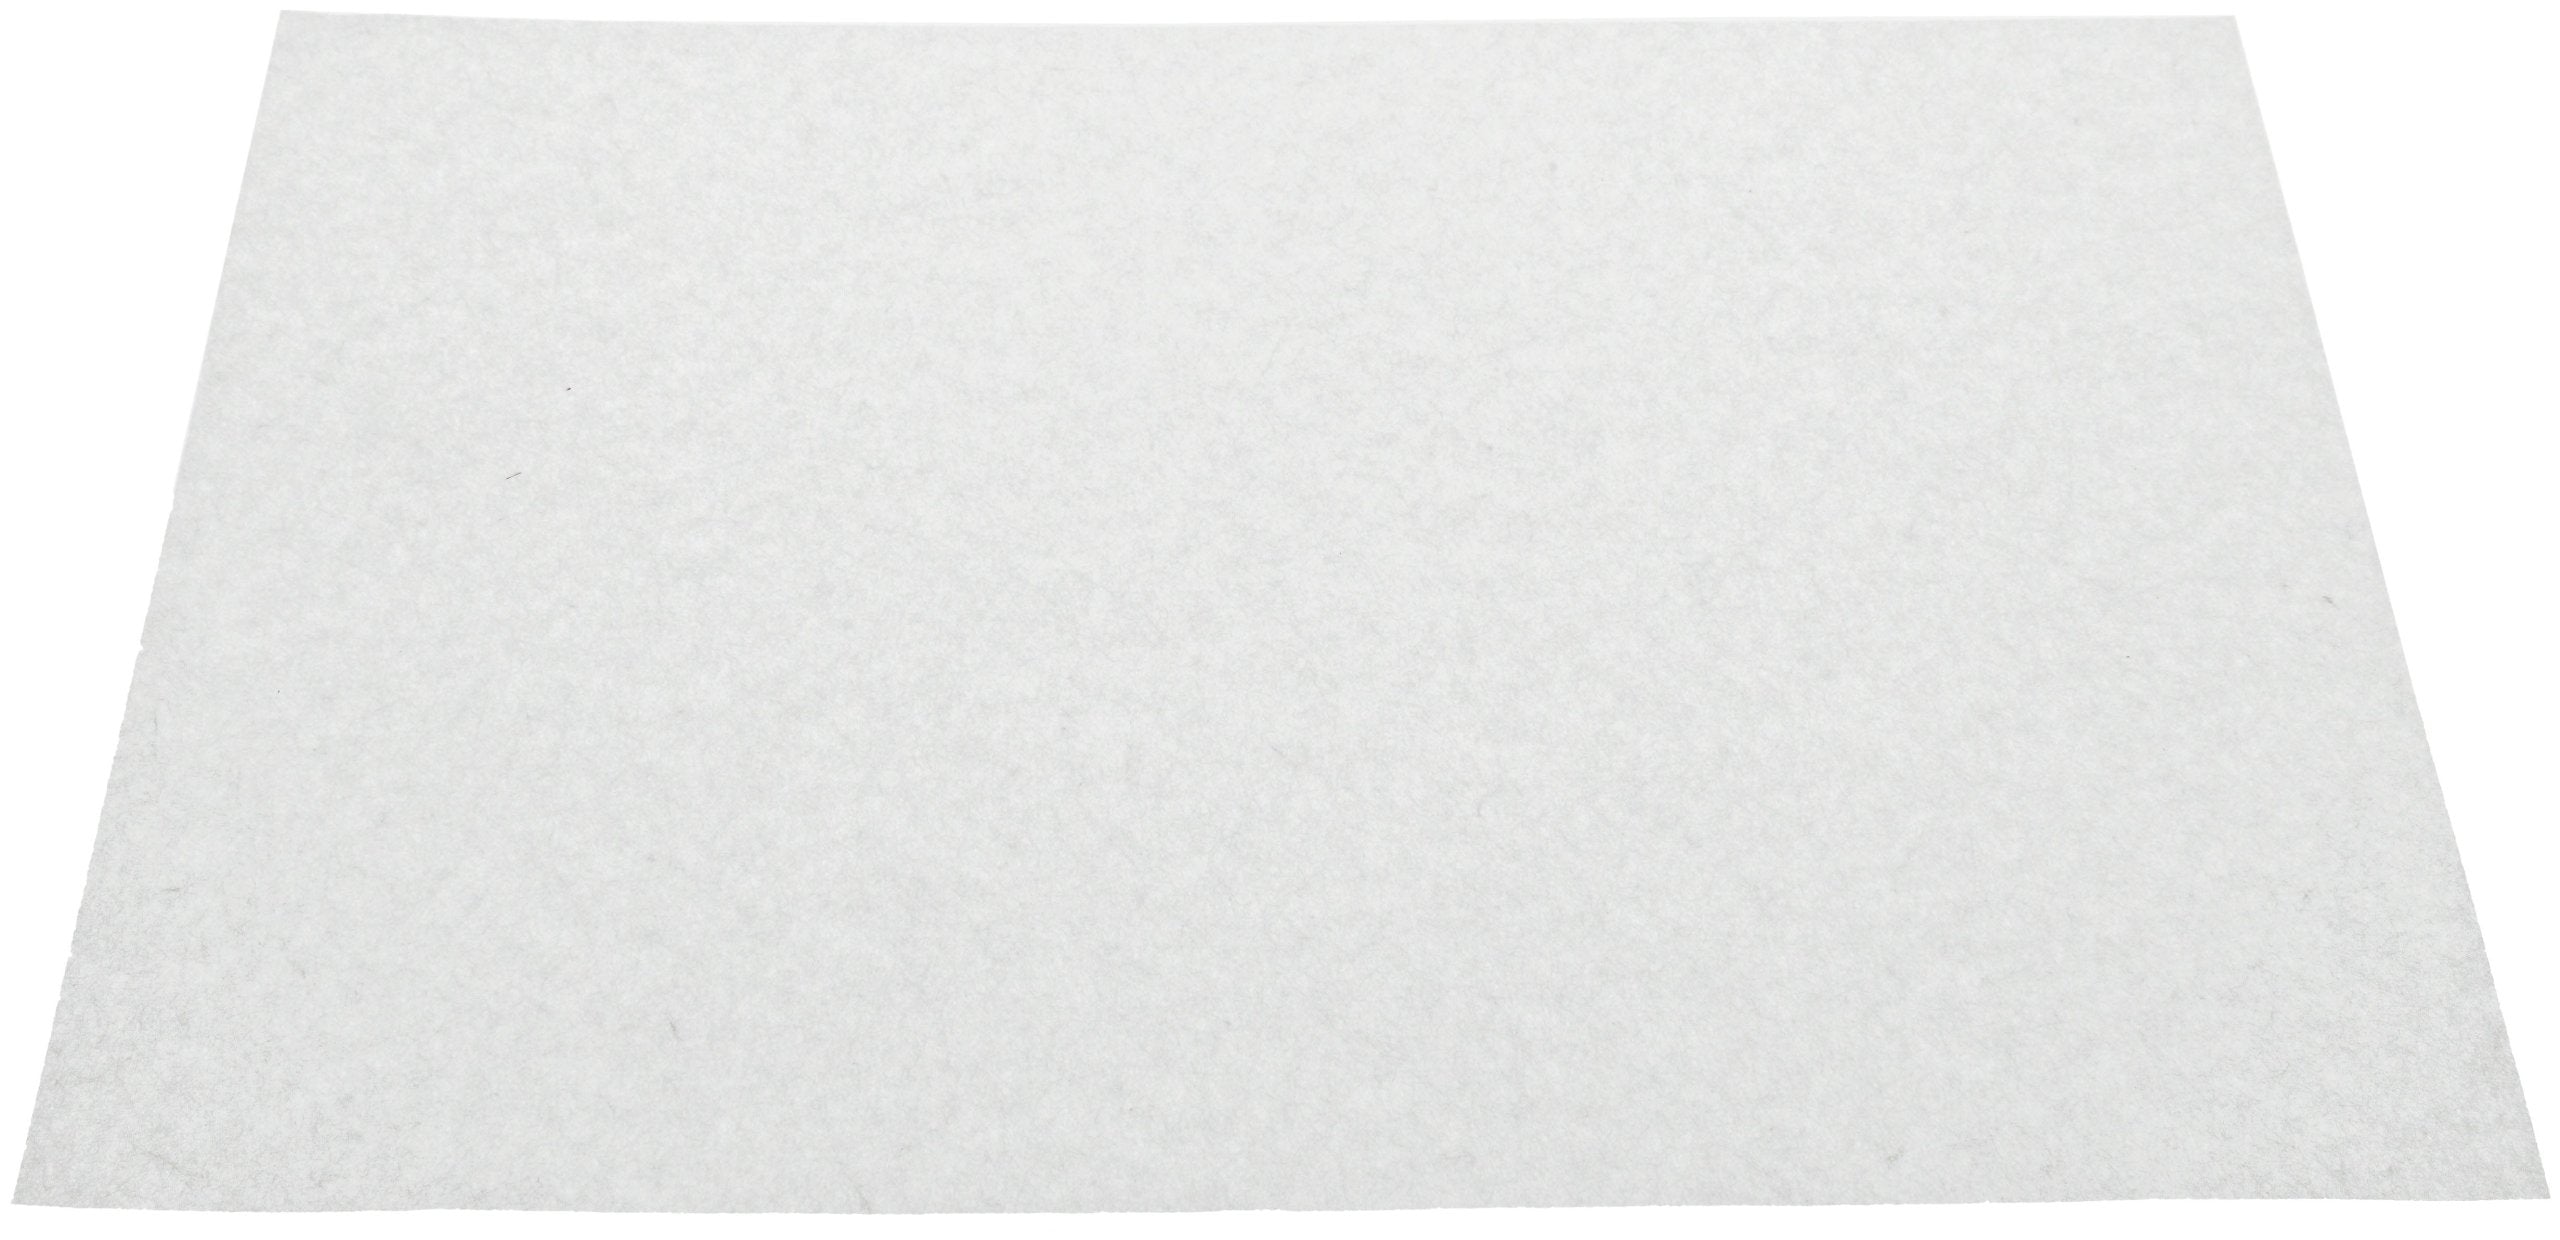 Whatman 10426981 Blotting Paper, Pure Cellulose, Grade GB005 Sheets, 20 x 20cm, 25/pk